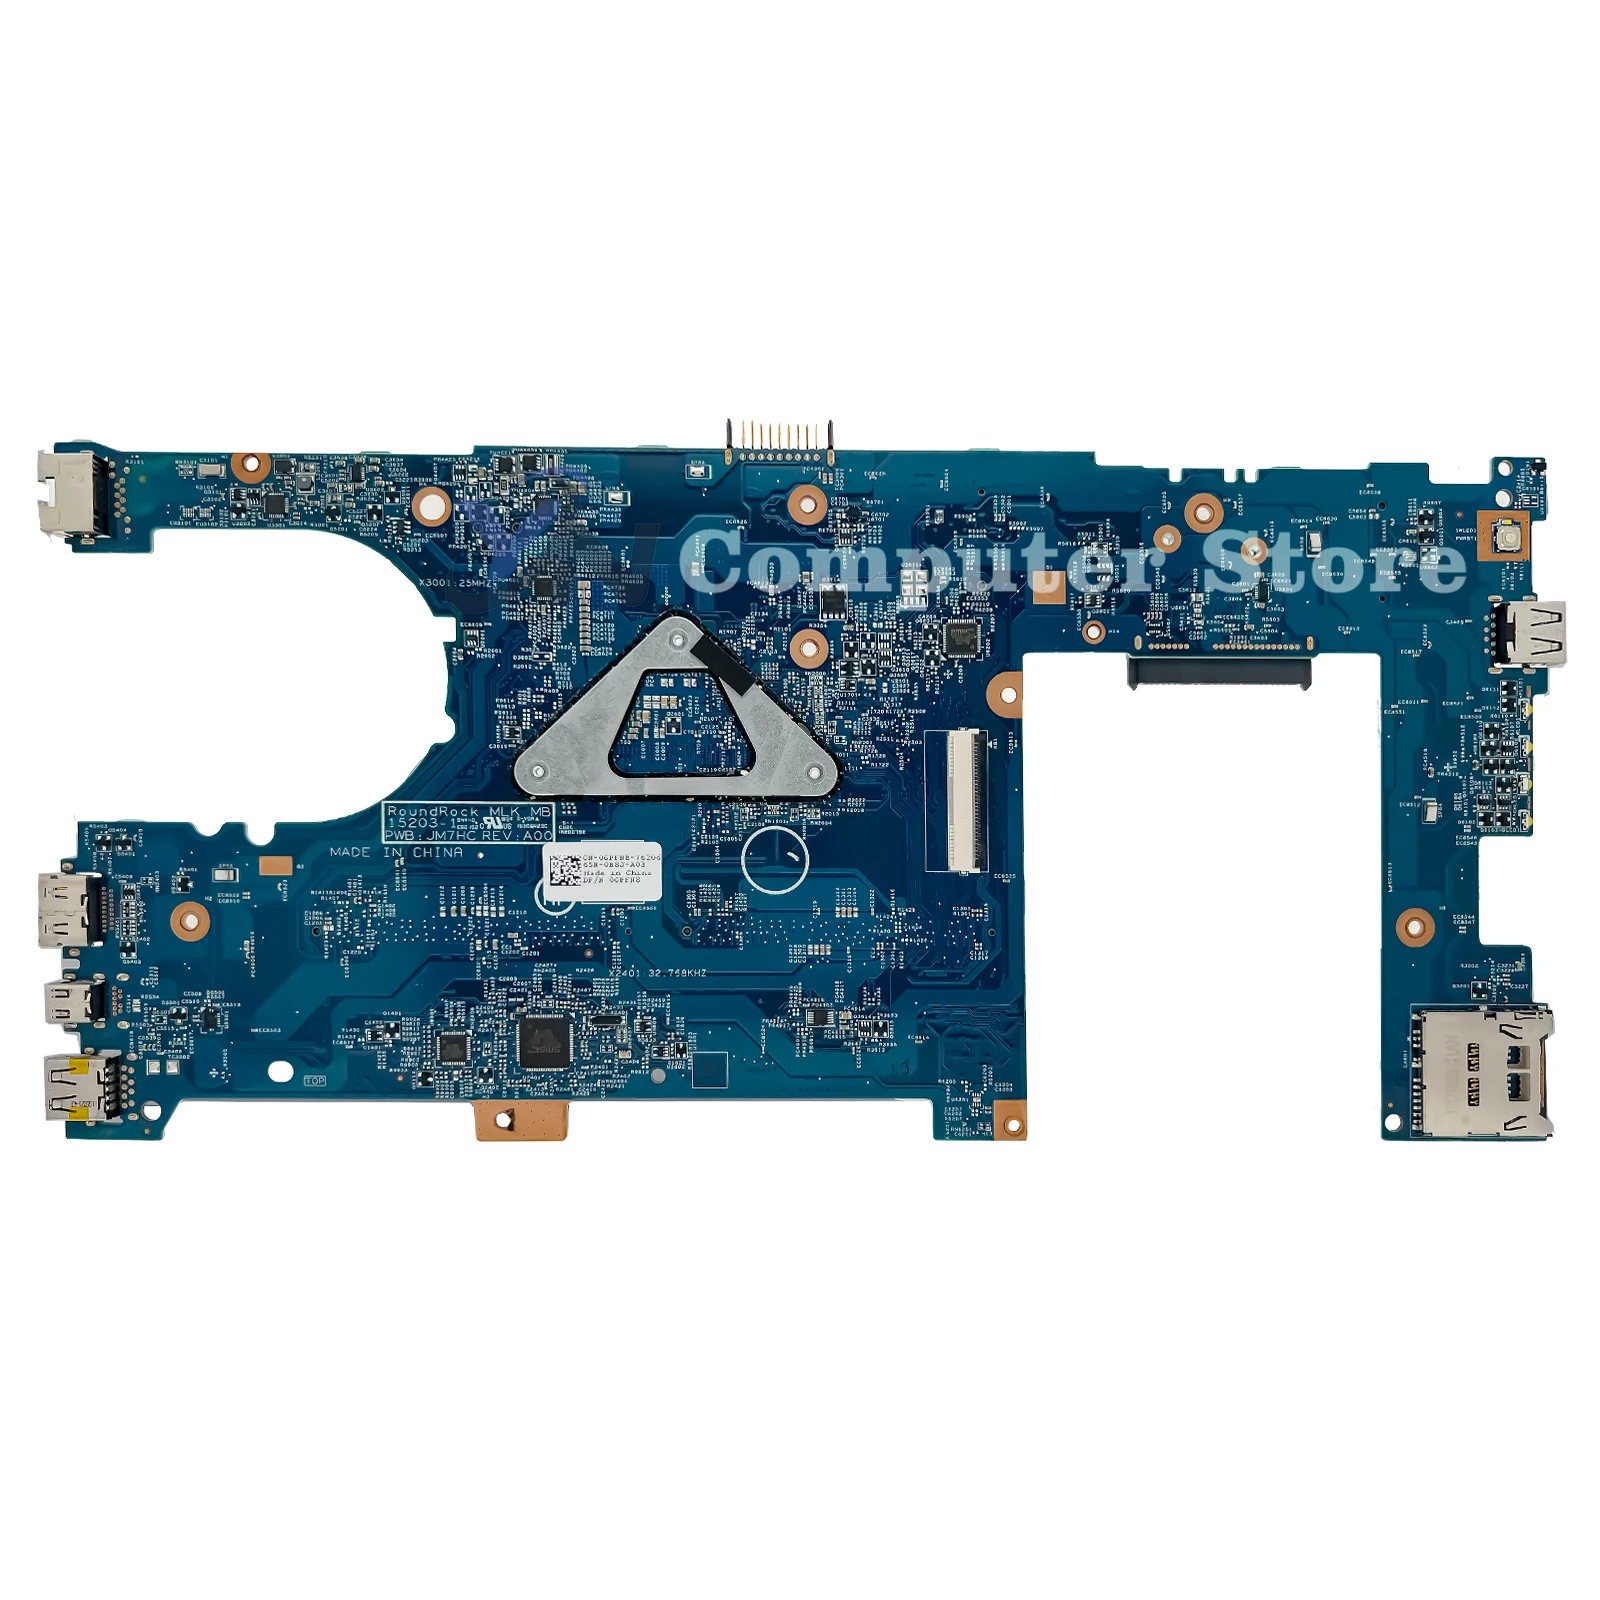 15203-1 Mainboard Za Dell Latitude 3350 L3350 Prenosni računalnik z Matično ploščo i5, i7 i3 5. Gen 3215U/3825U DDR3L 100% TEST OK